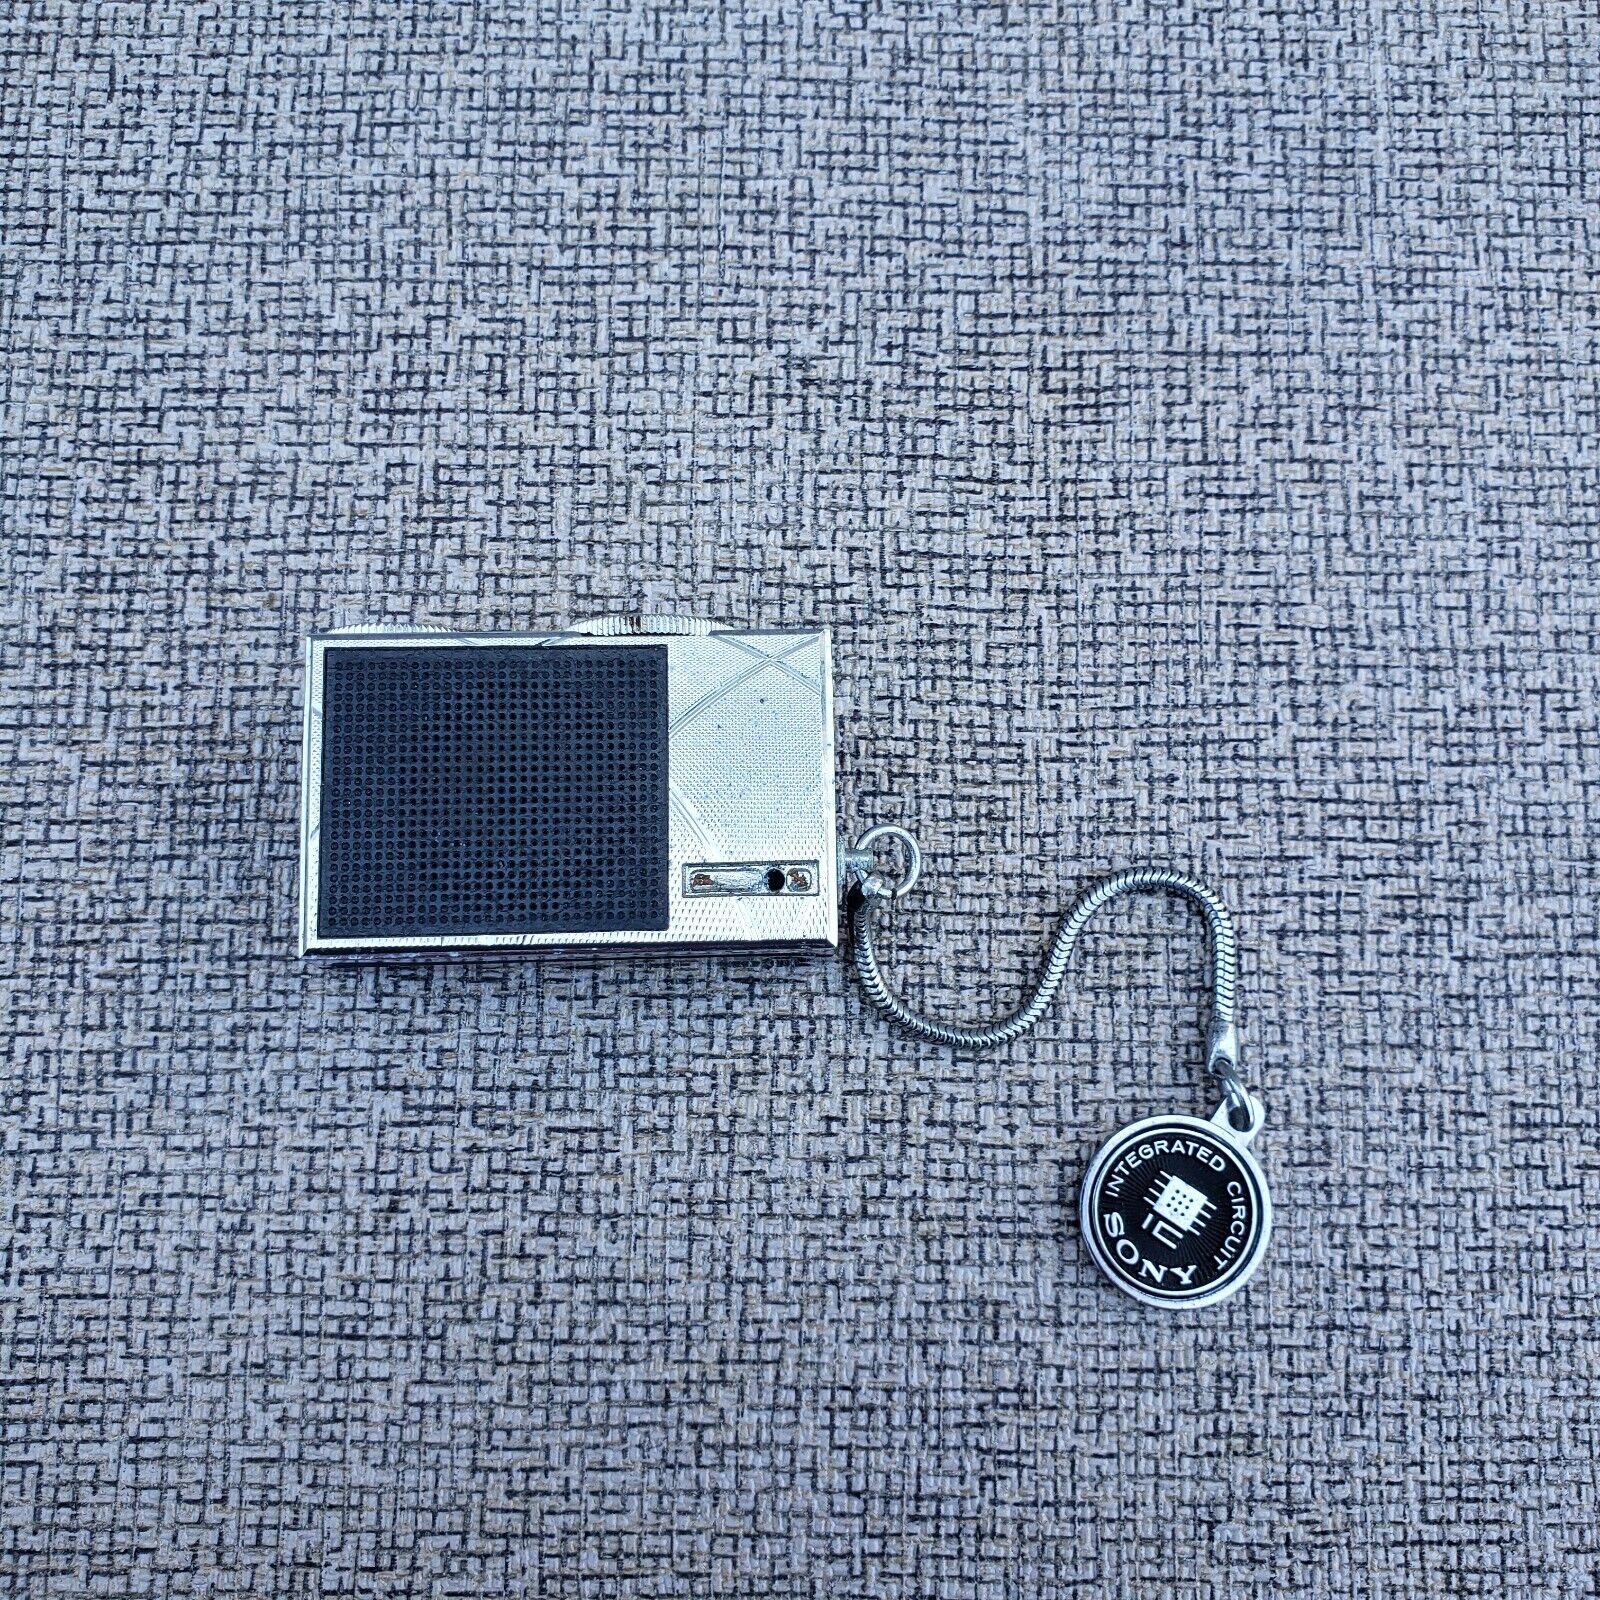 RARE Sony ICR-120 Integrated Circuit Miniature Radio- Untested 